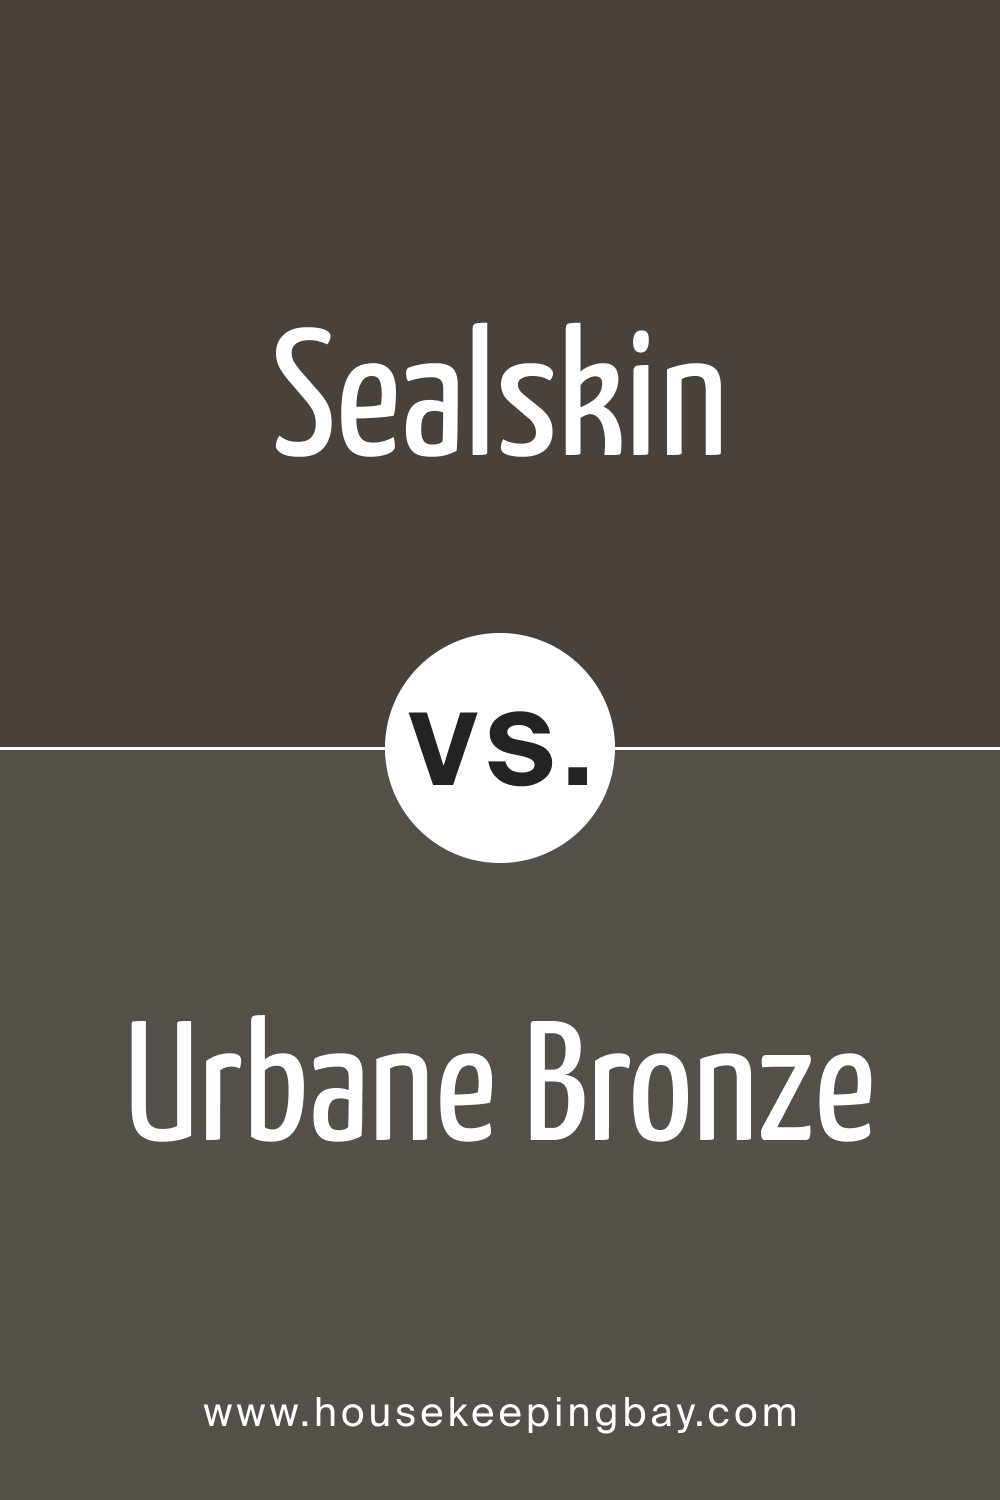 SW 7675 Sealskin vs. SW 7048 Urbane Bronze